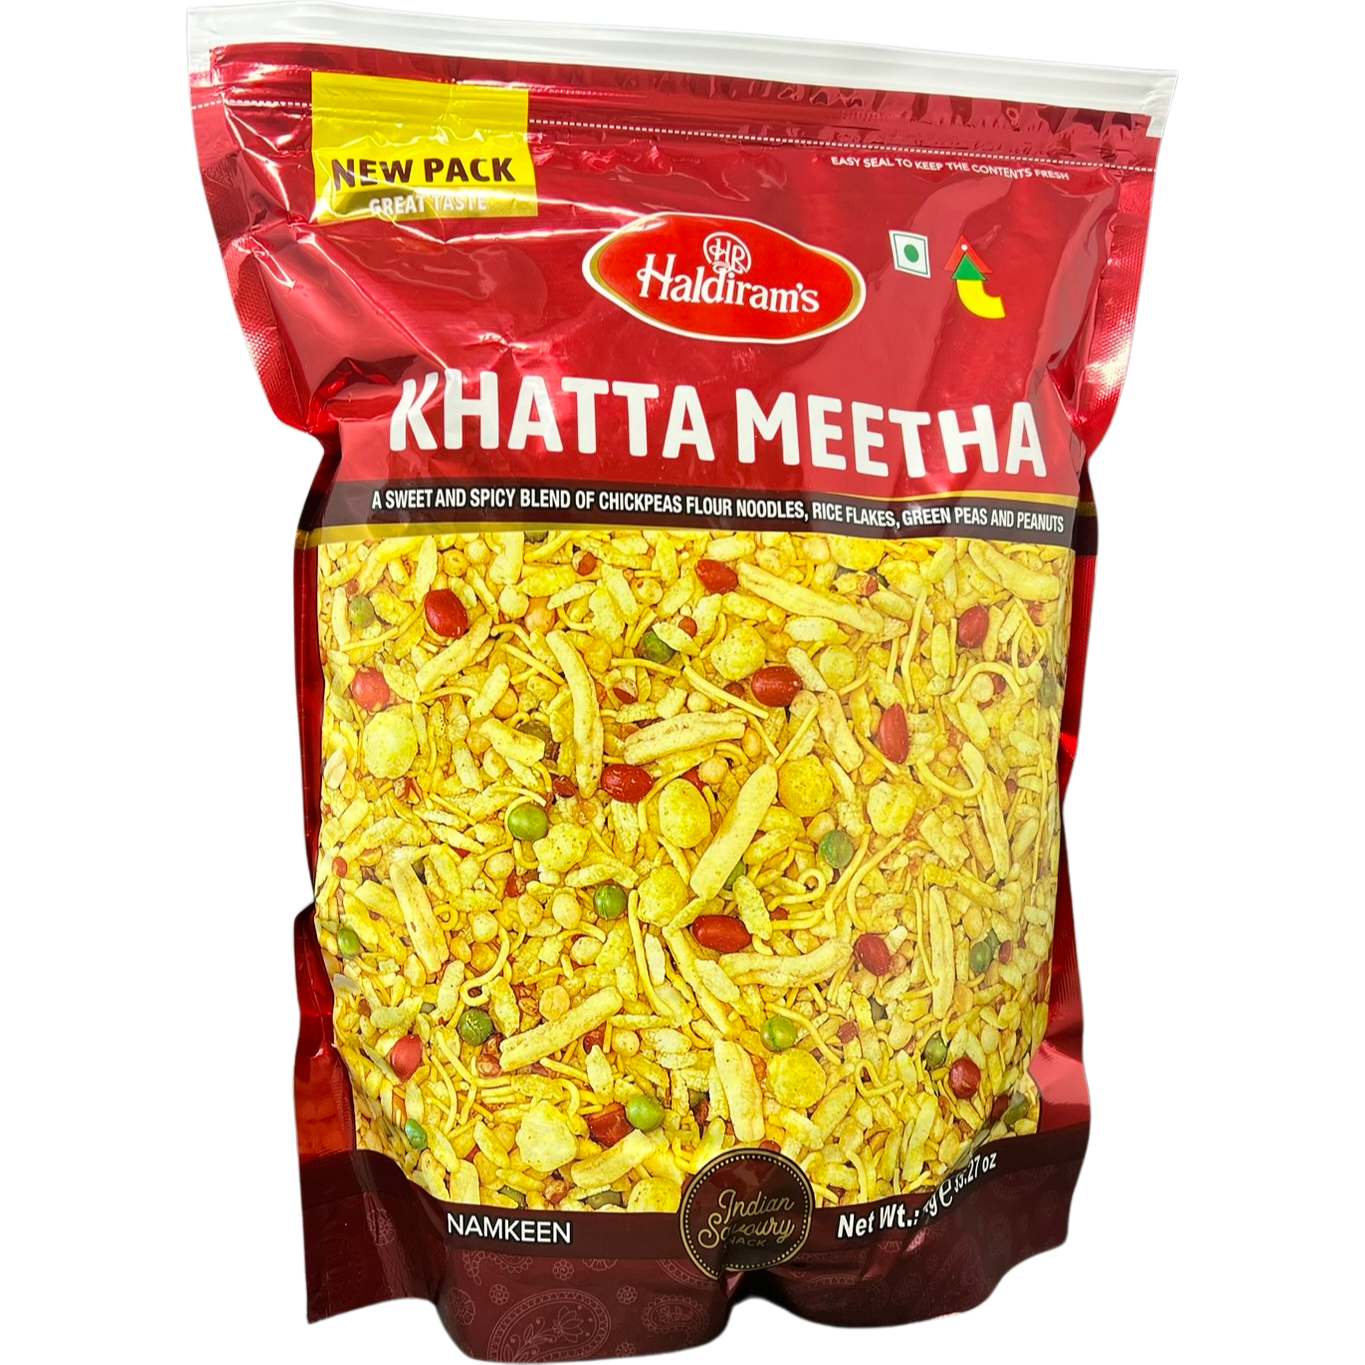 Pack of 4 - Haldiram's Khatta Meetha - 1 Kg (2.2 Lb)